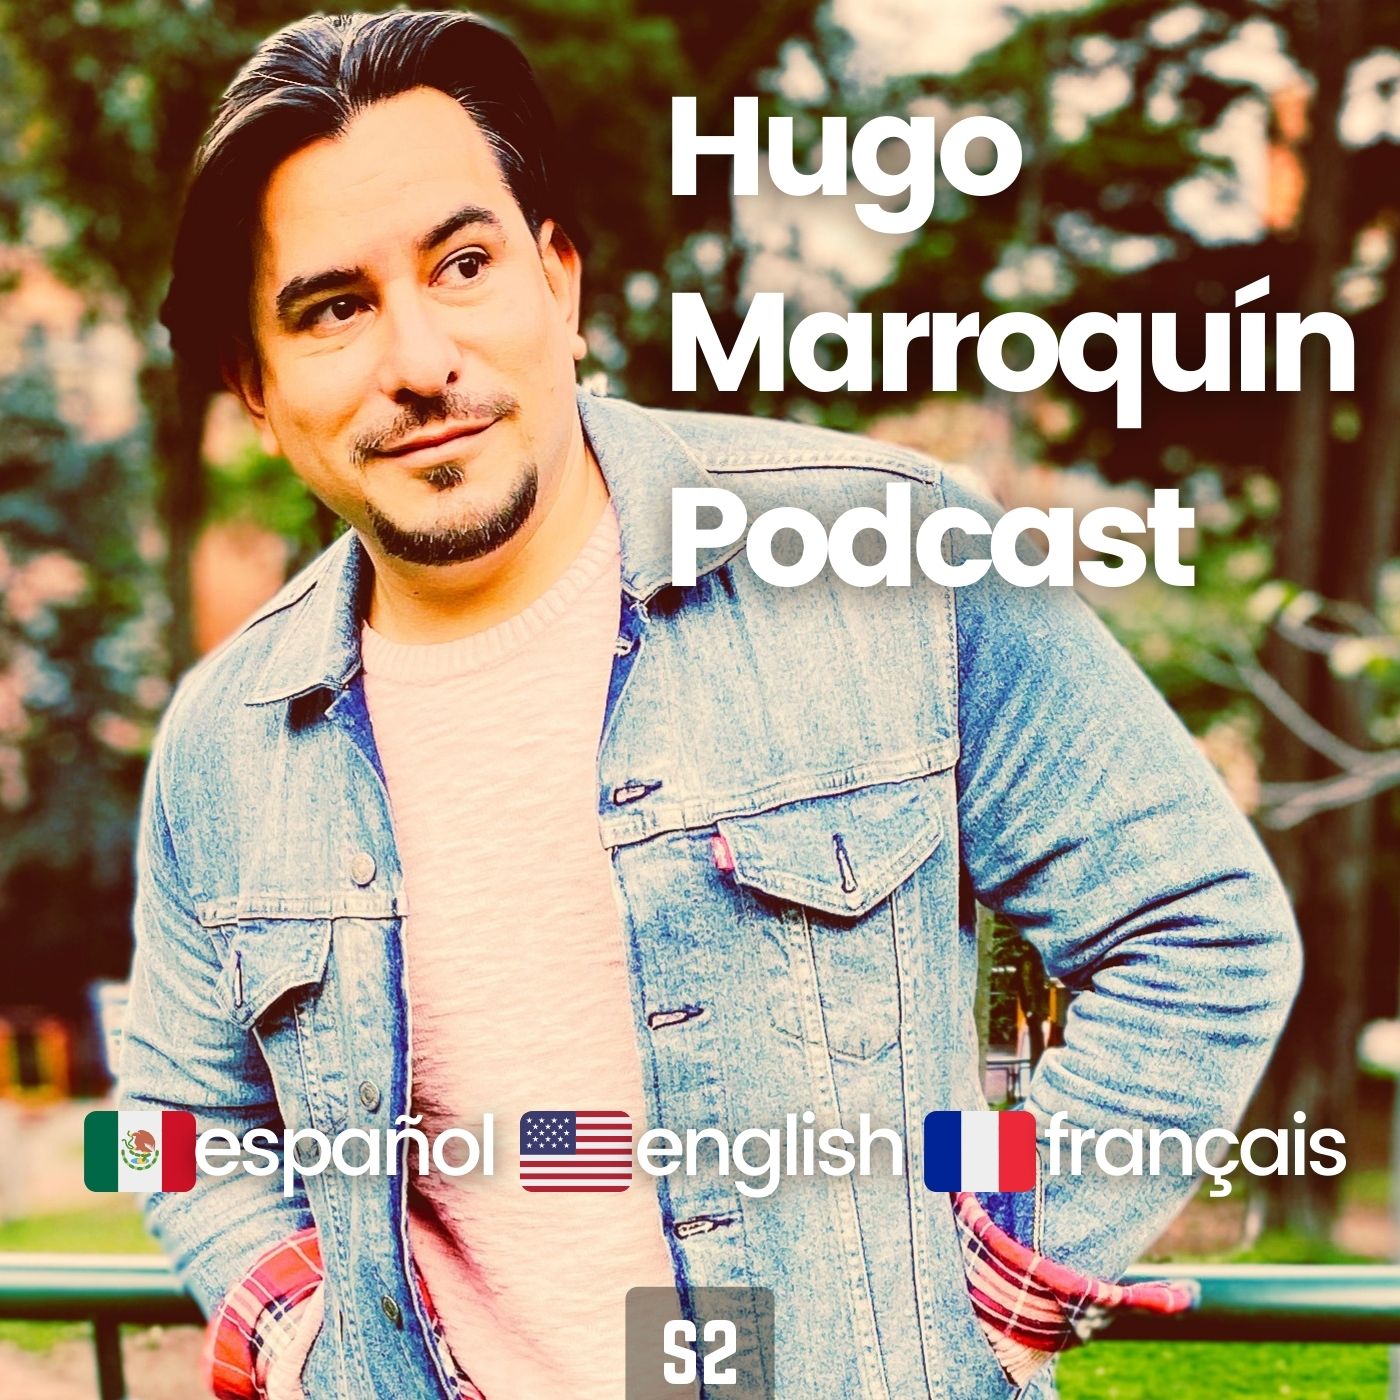 Hugo Marroquin Podcast